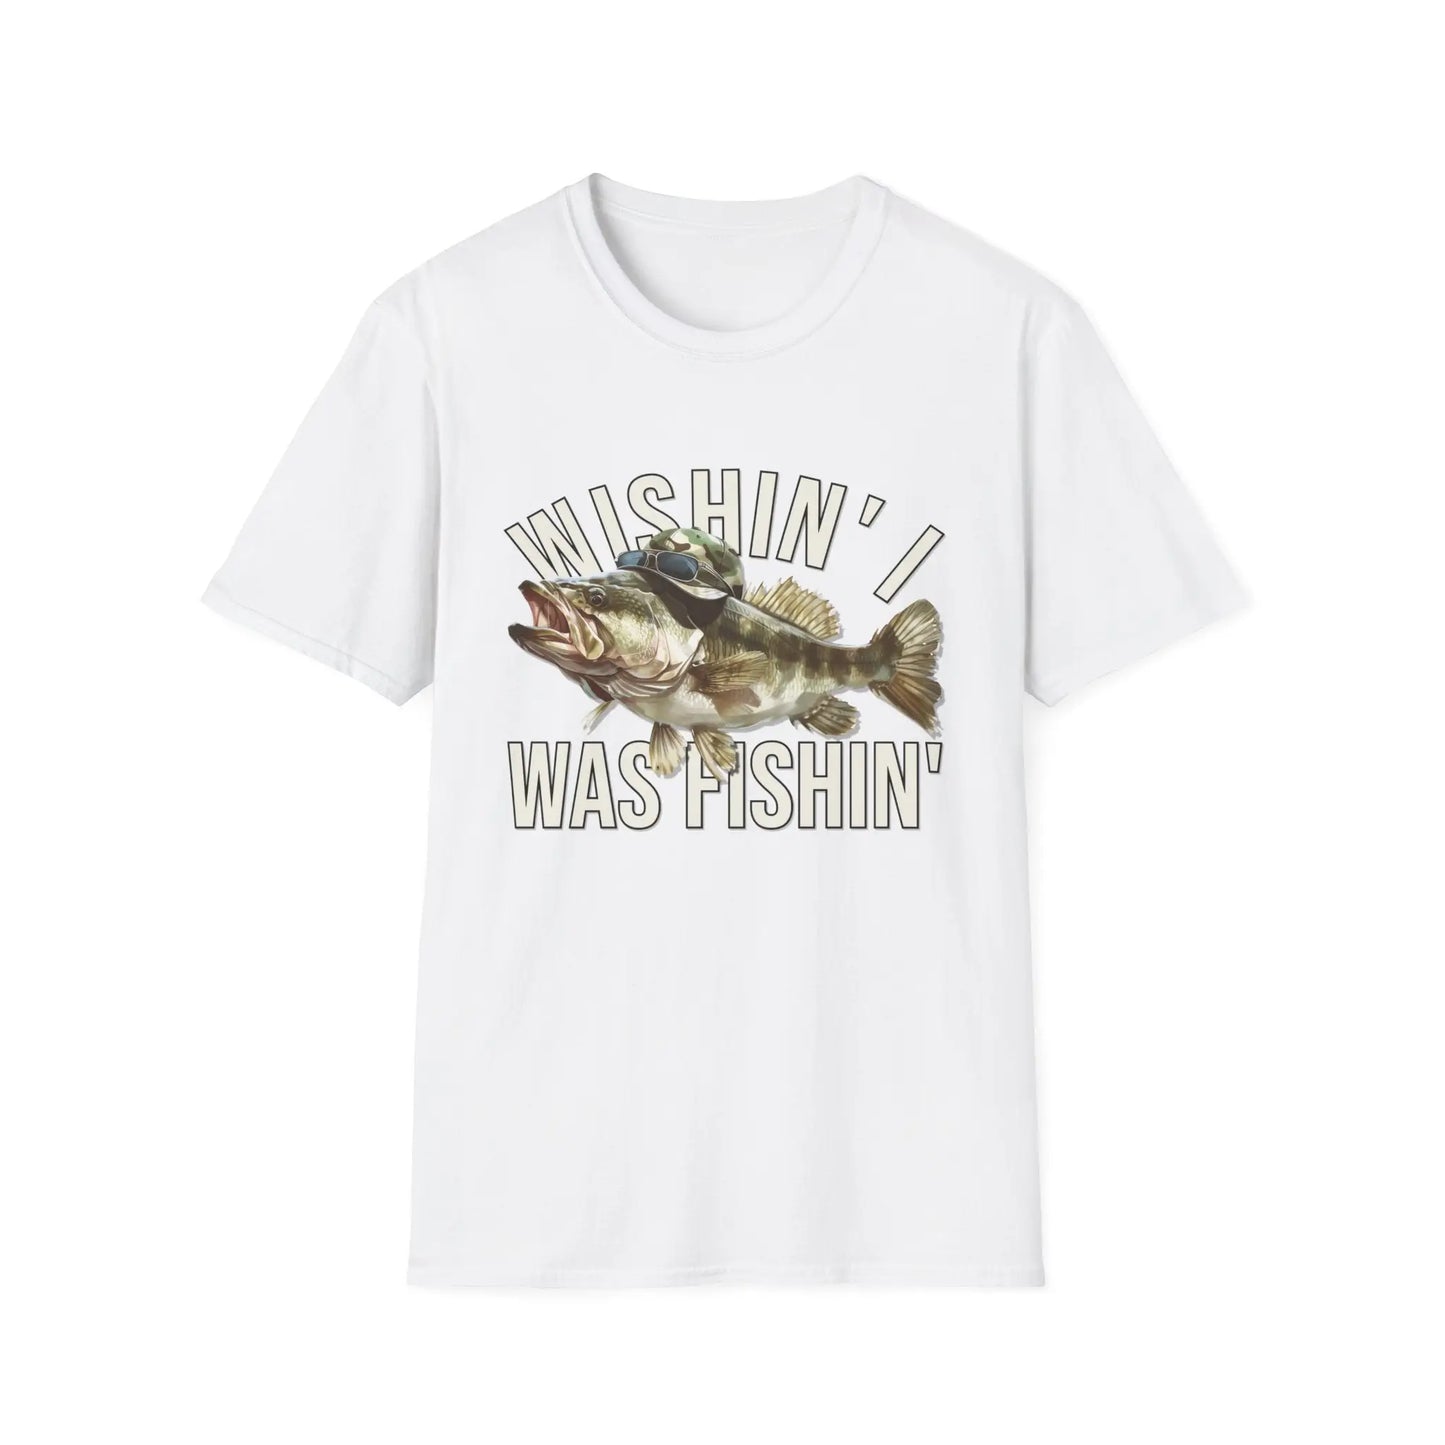 Wishin' I Was Fishin' Women's Softstyle T-Shirt - Wicked Tees